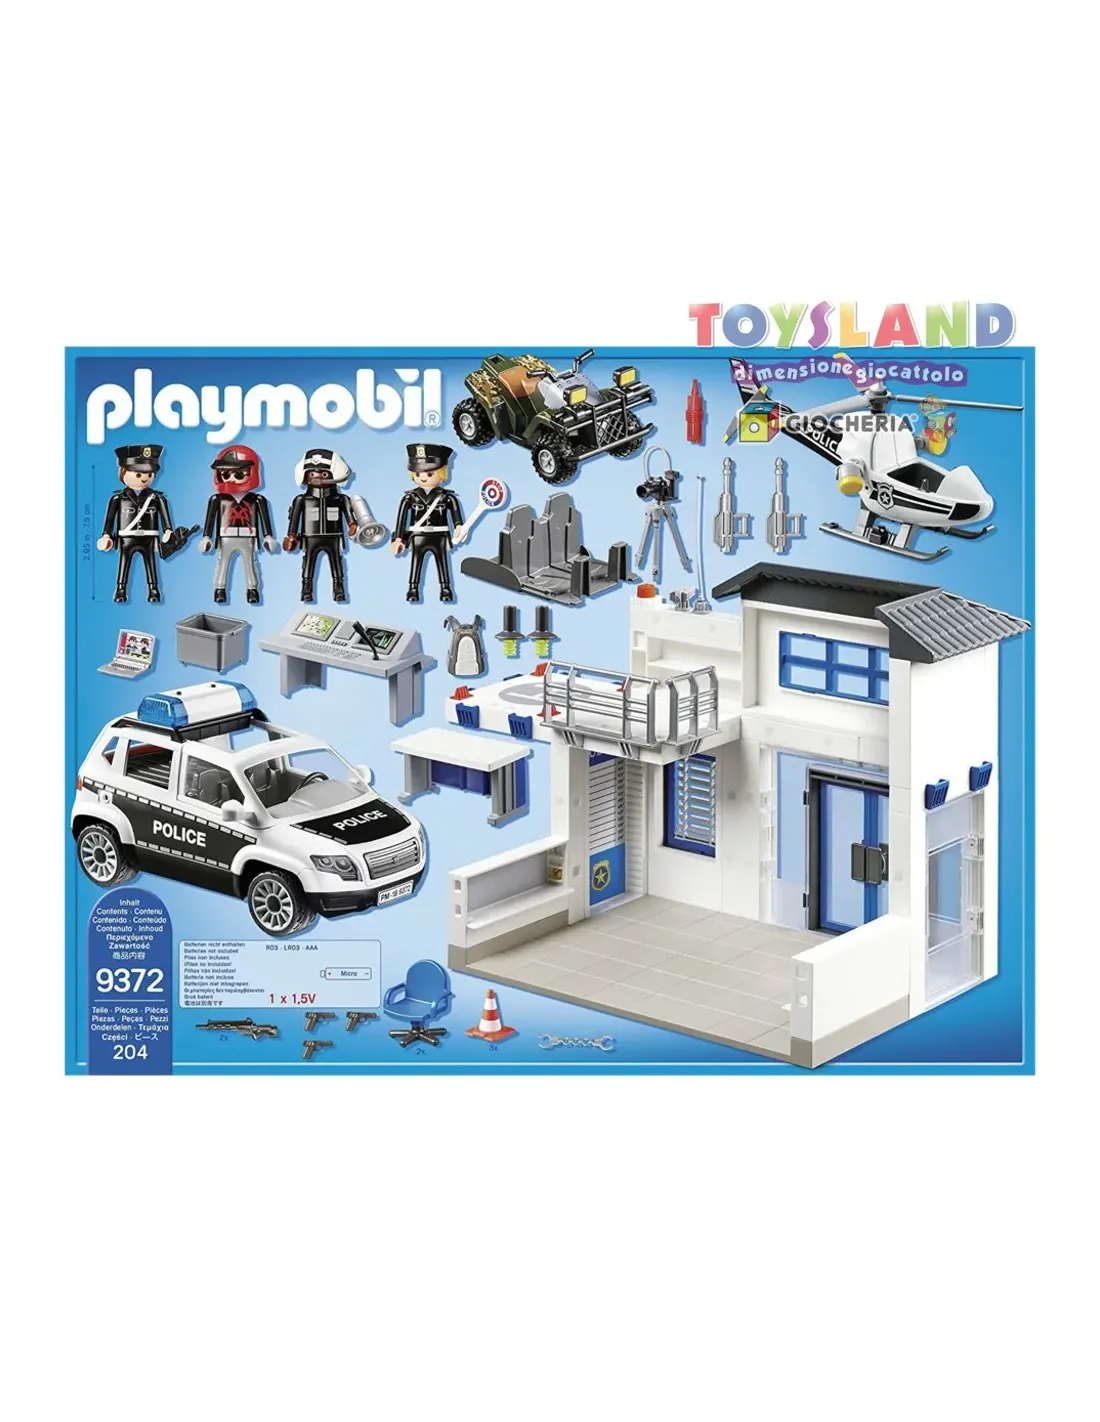 stazione polizia playmobil